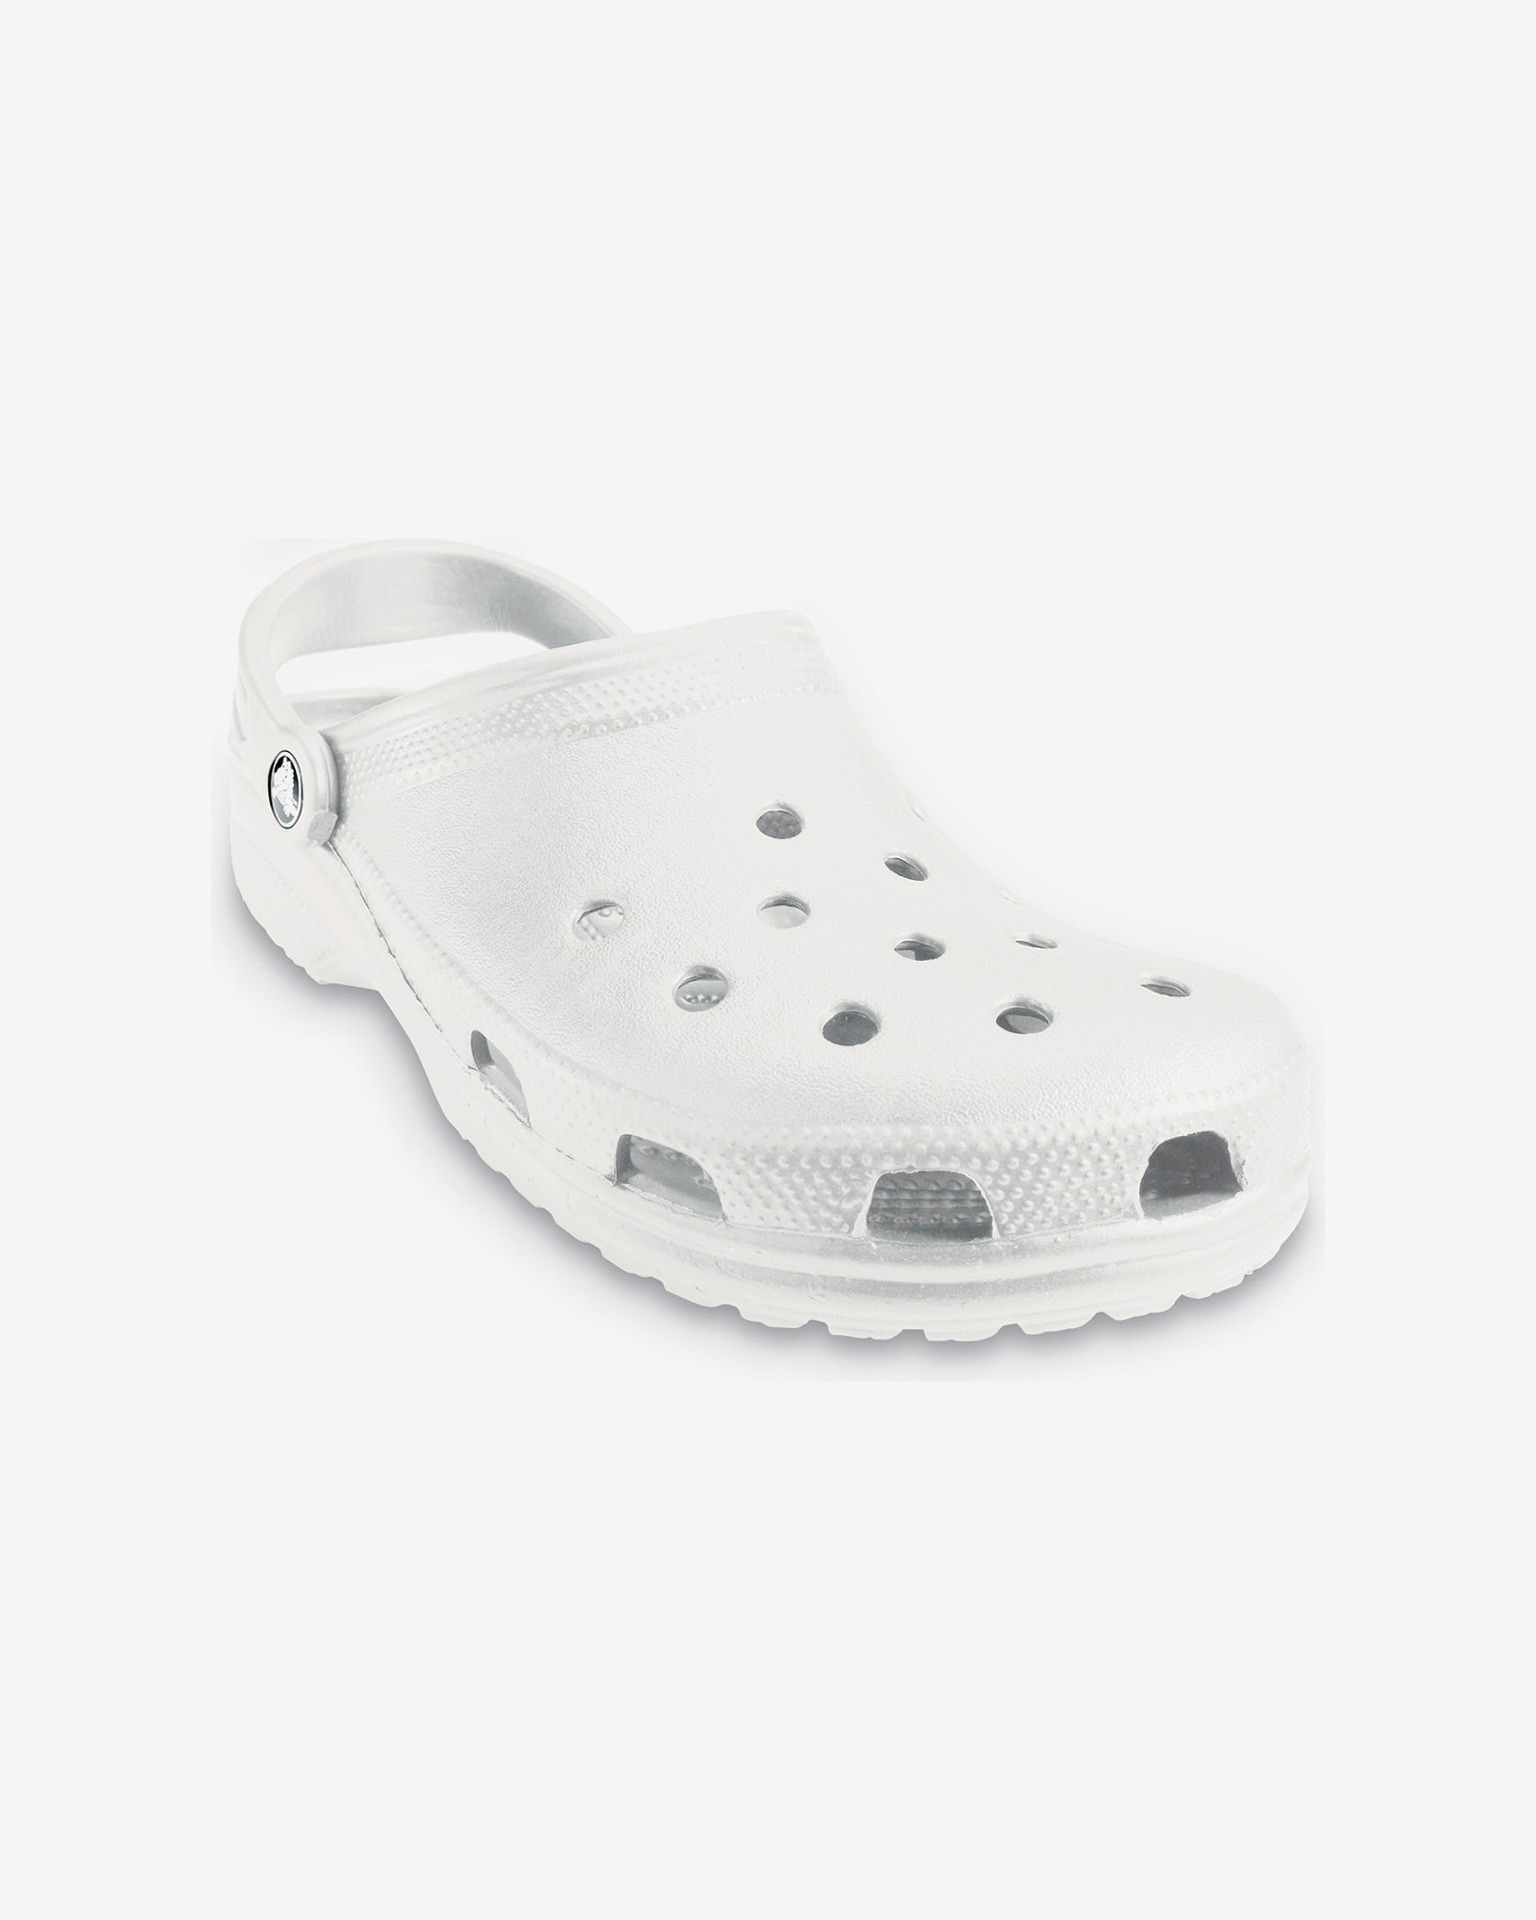 Womens Crocs Classic Tie Dye Summer Slip On Sandals White 207283-928 | eBay